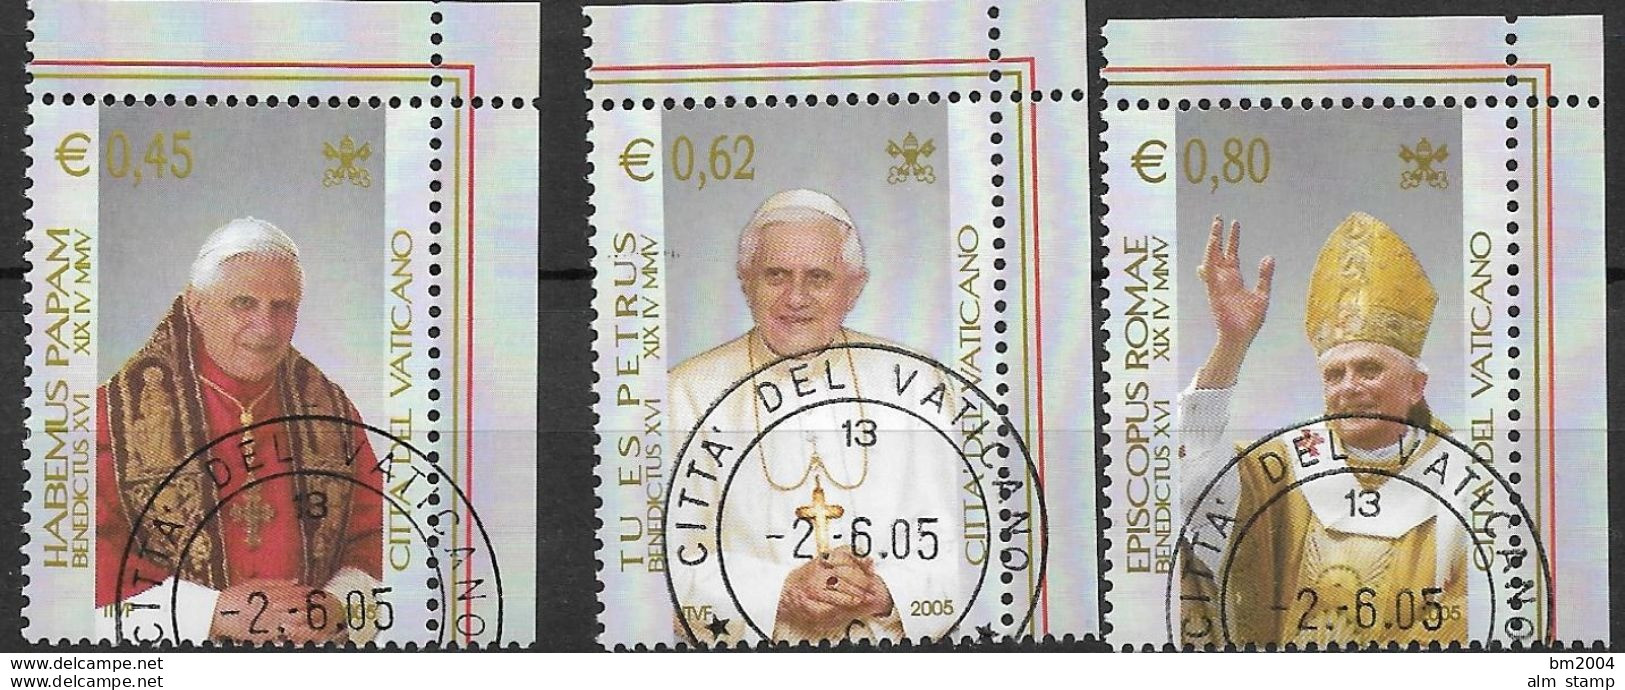 2005 Vatikan Mi. 1517-9 Used  Wahl Von Papst Benedikt XVI - Used Stamps